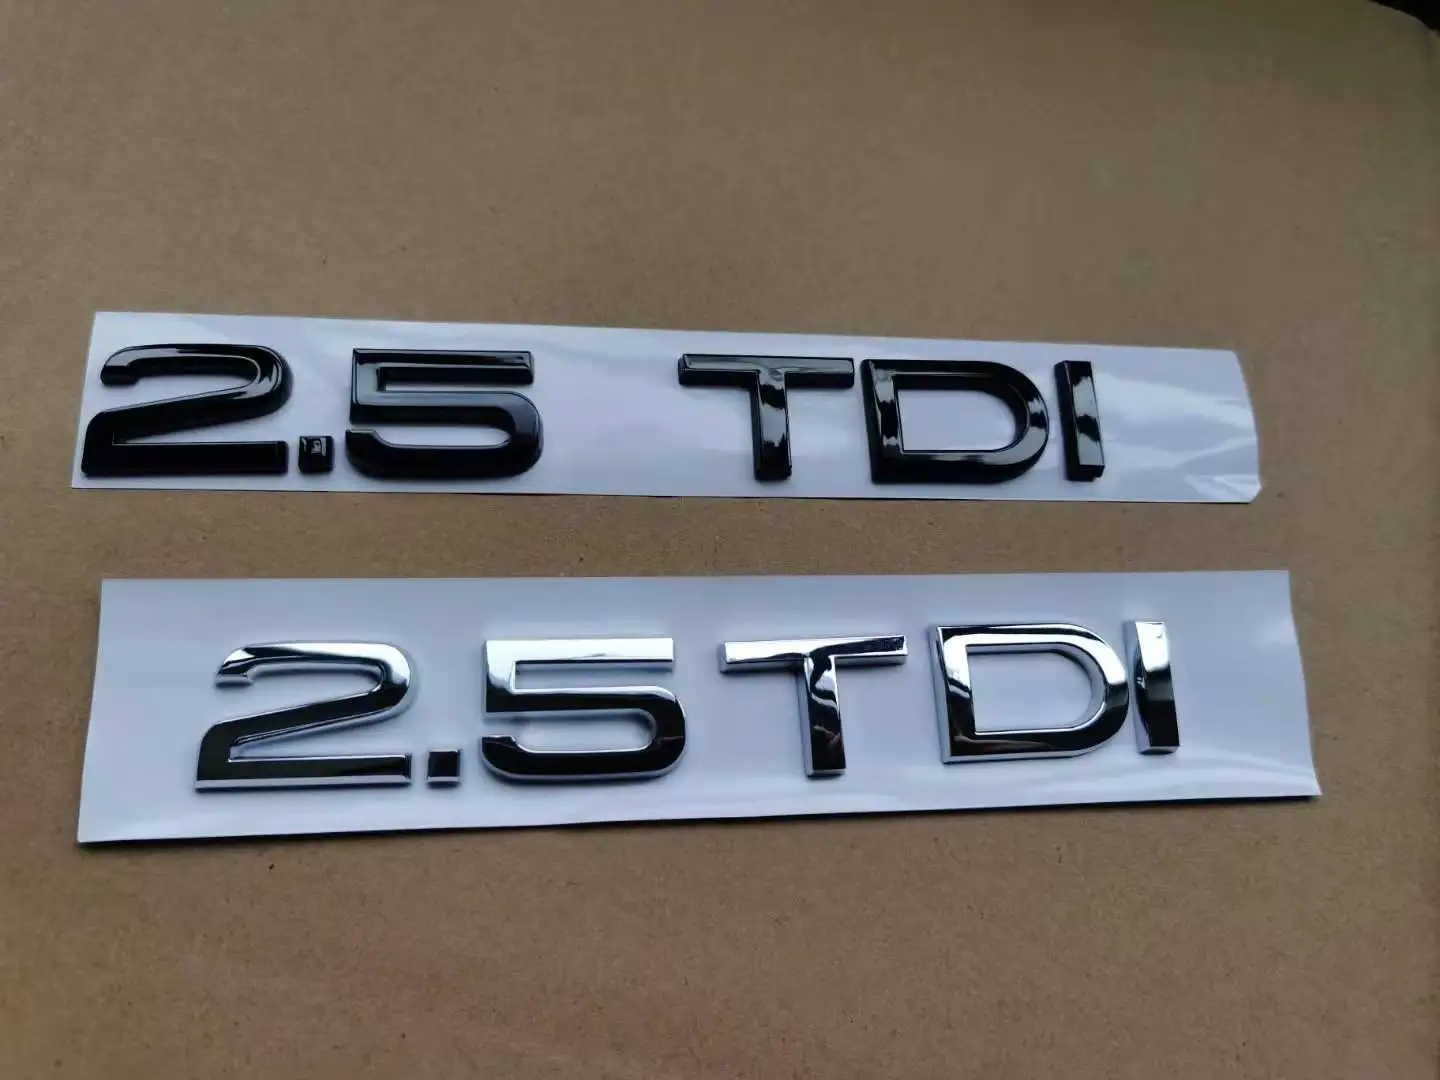 

1X Chrome glossy black ABS 2.5 TDI Car Body Rear Trunk Emblem Badge Sticker for Audi Accessories